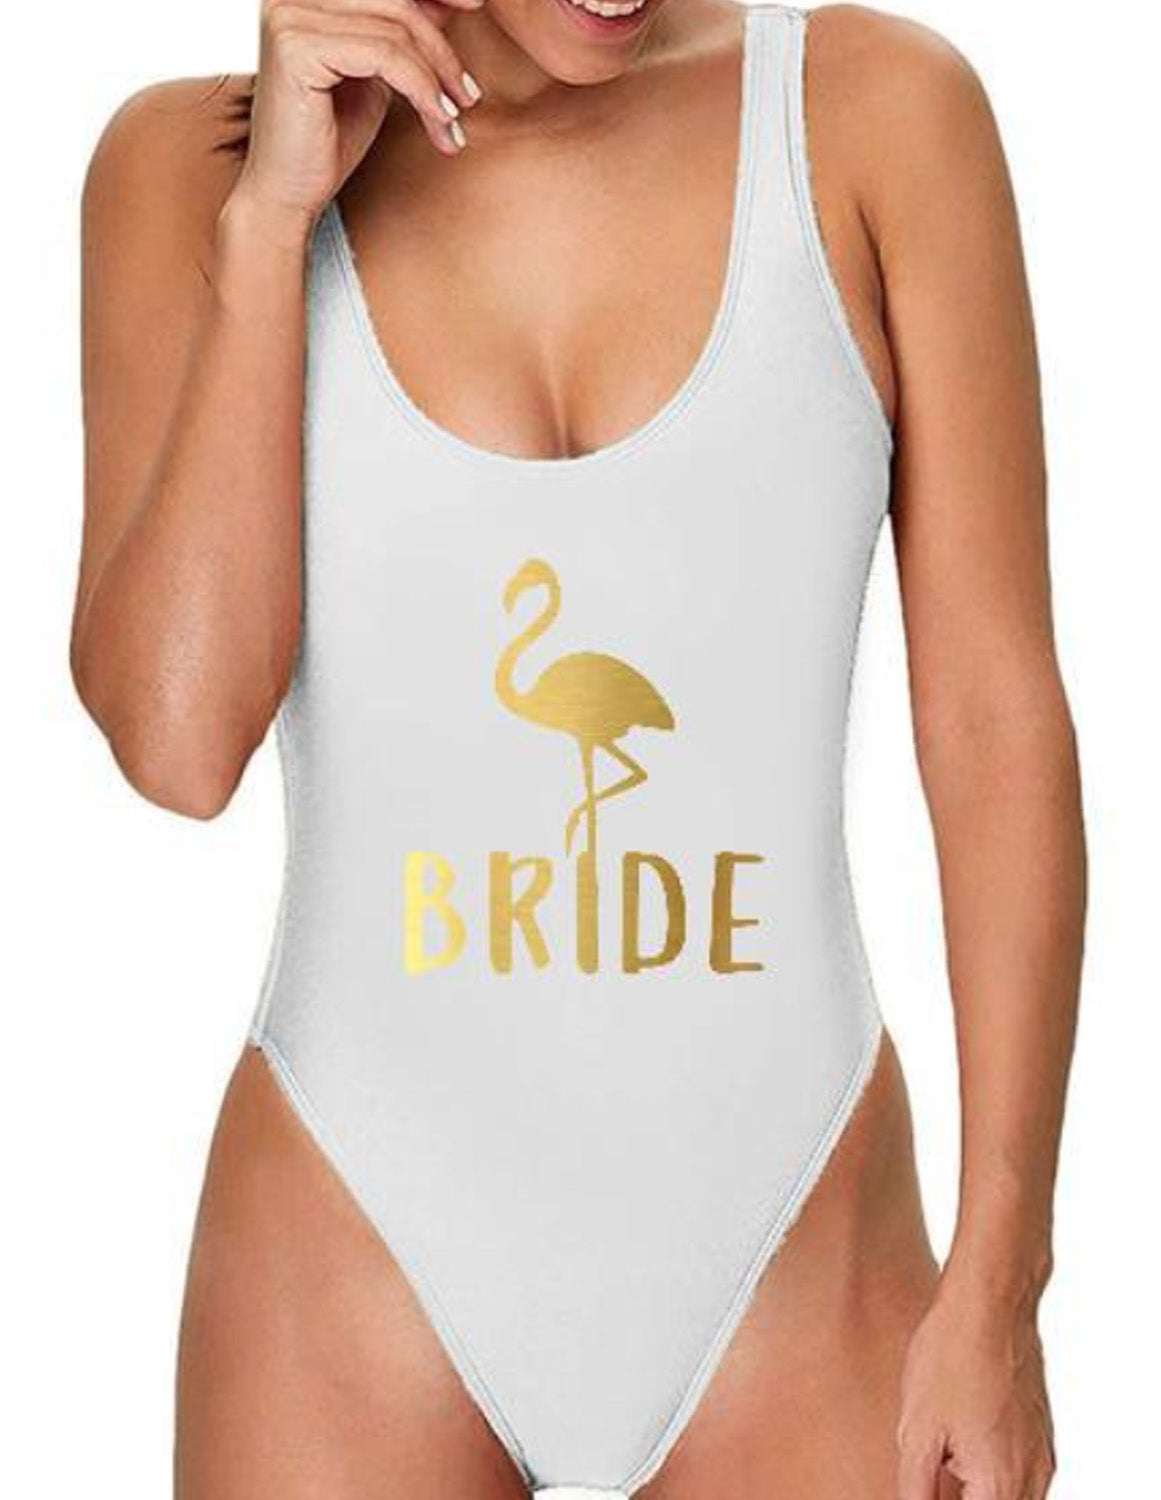 Bride's Flock Bride Swimsuit